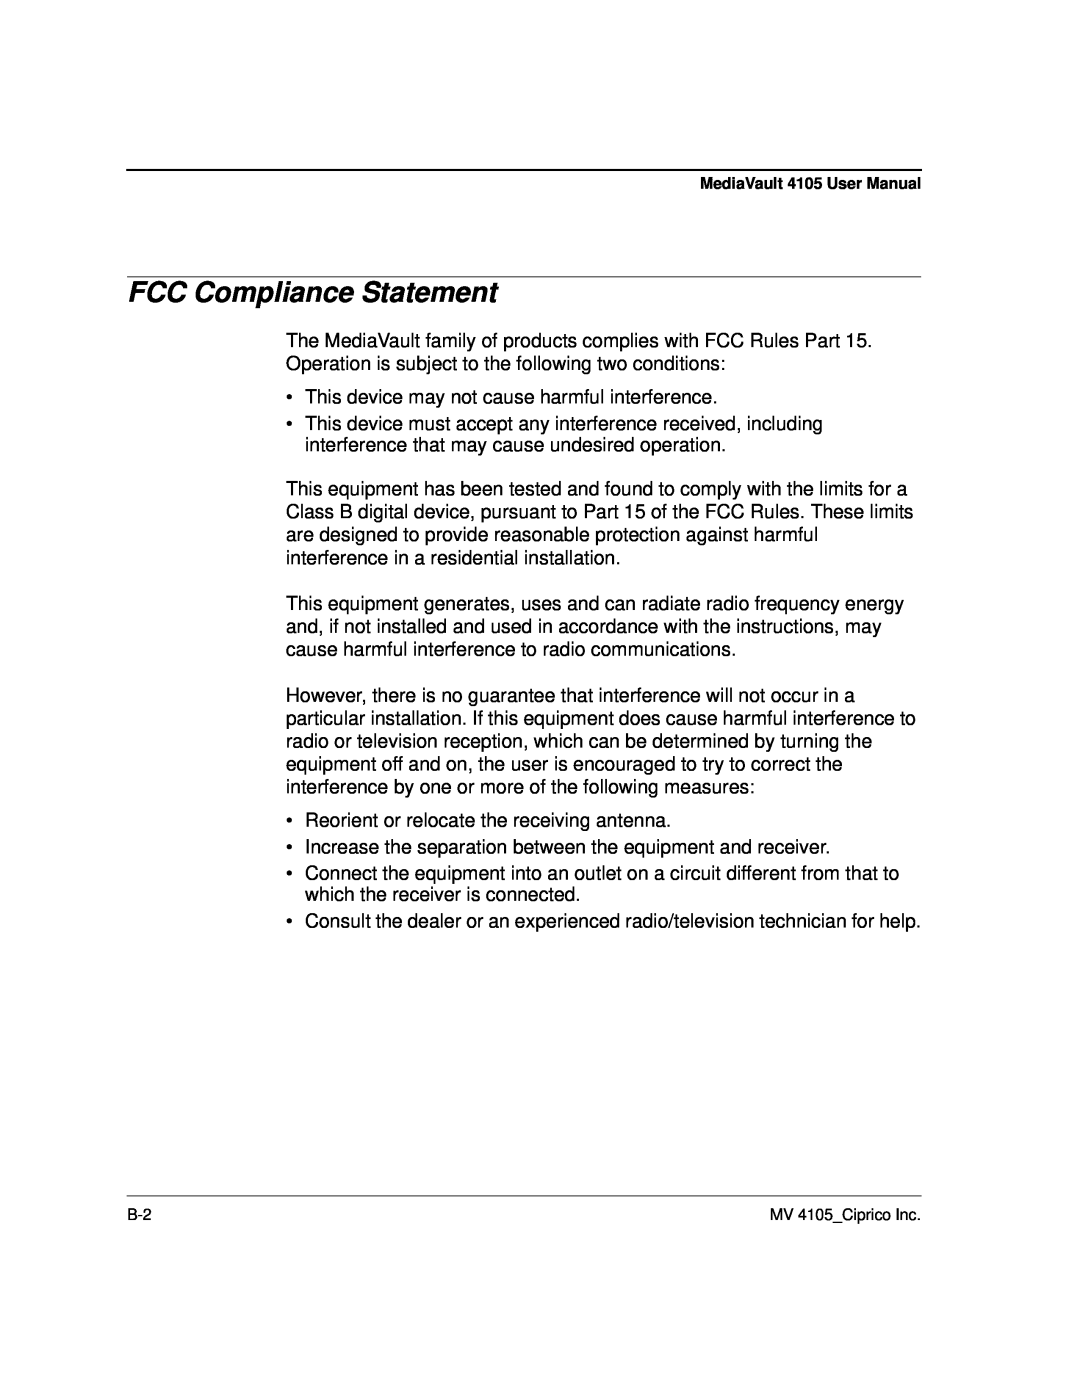 Ciprico 4105 Series user manual FCC Compliance Statement 